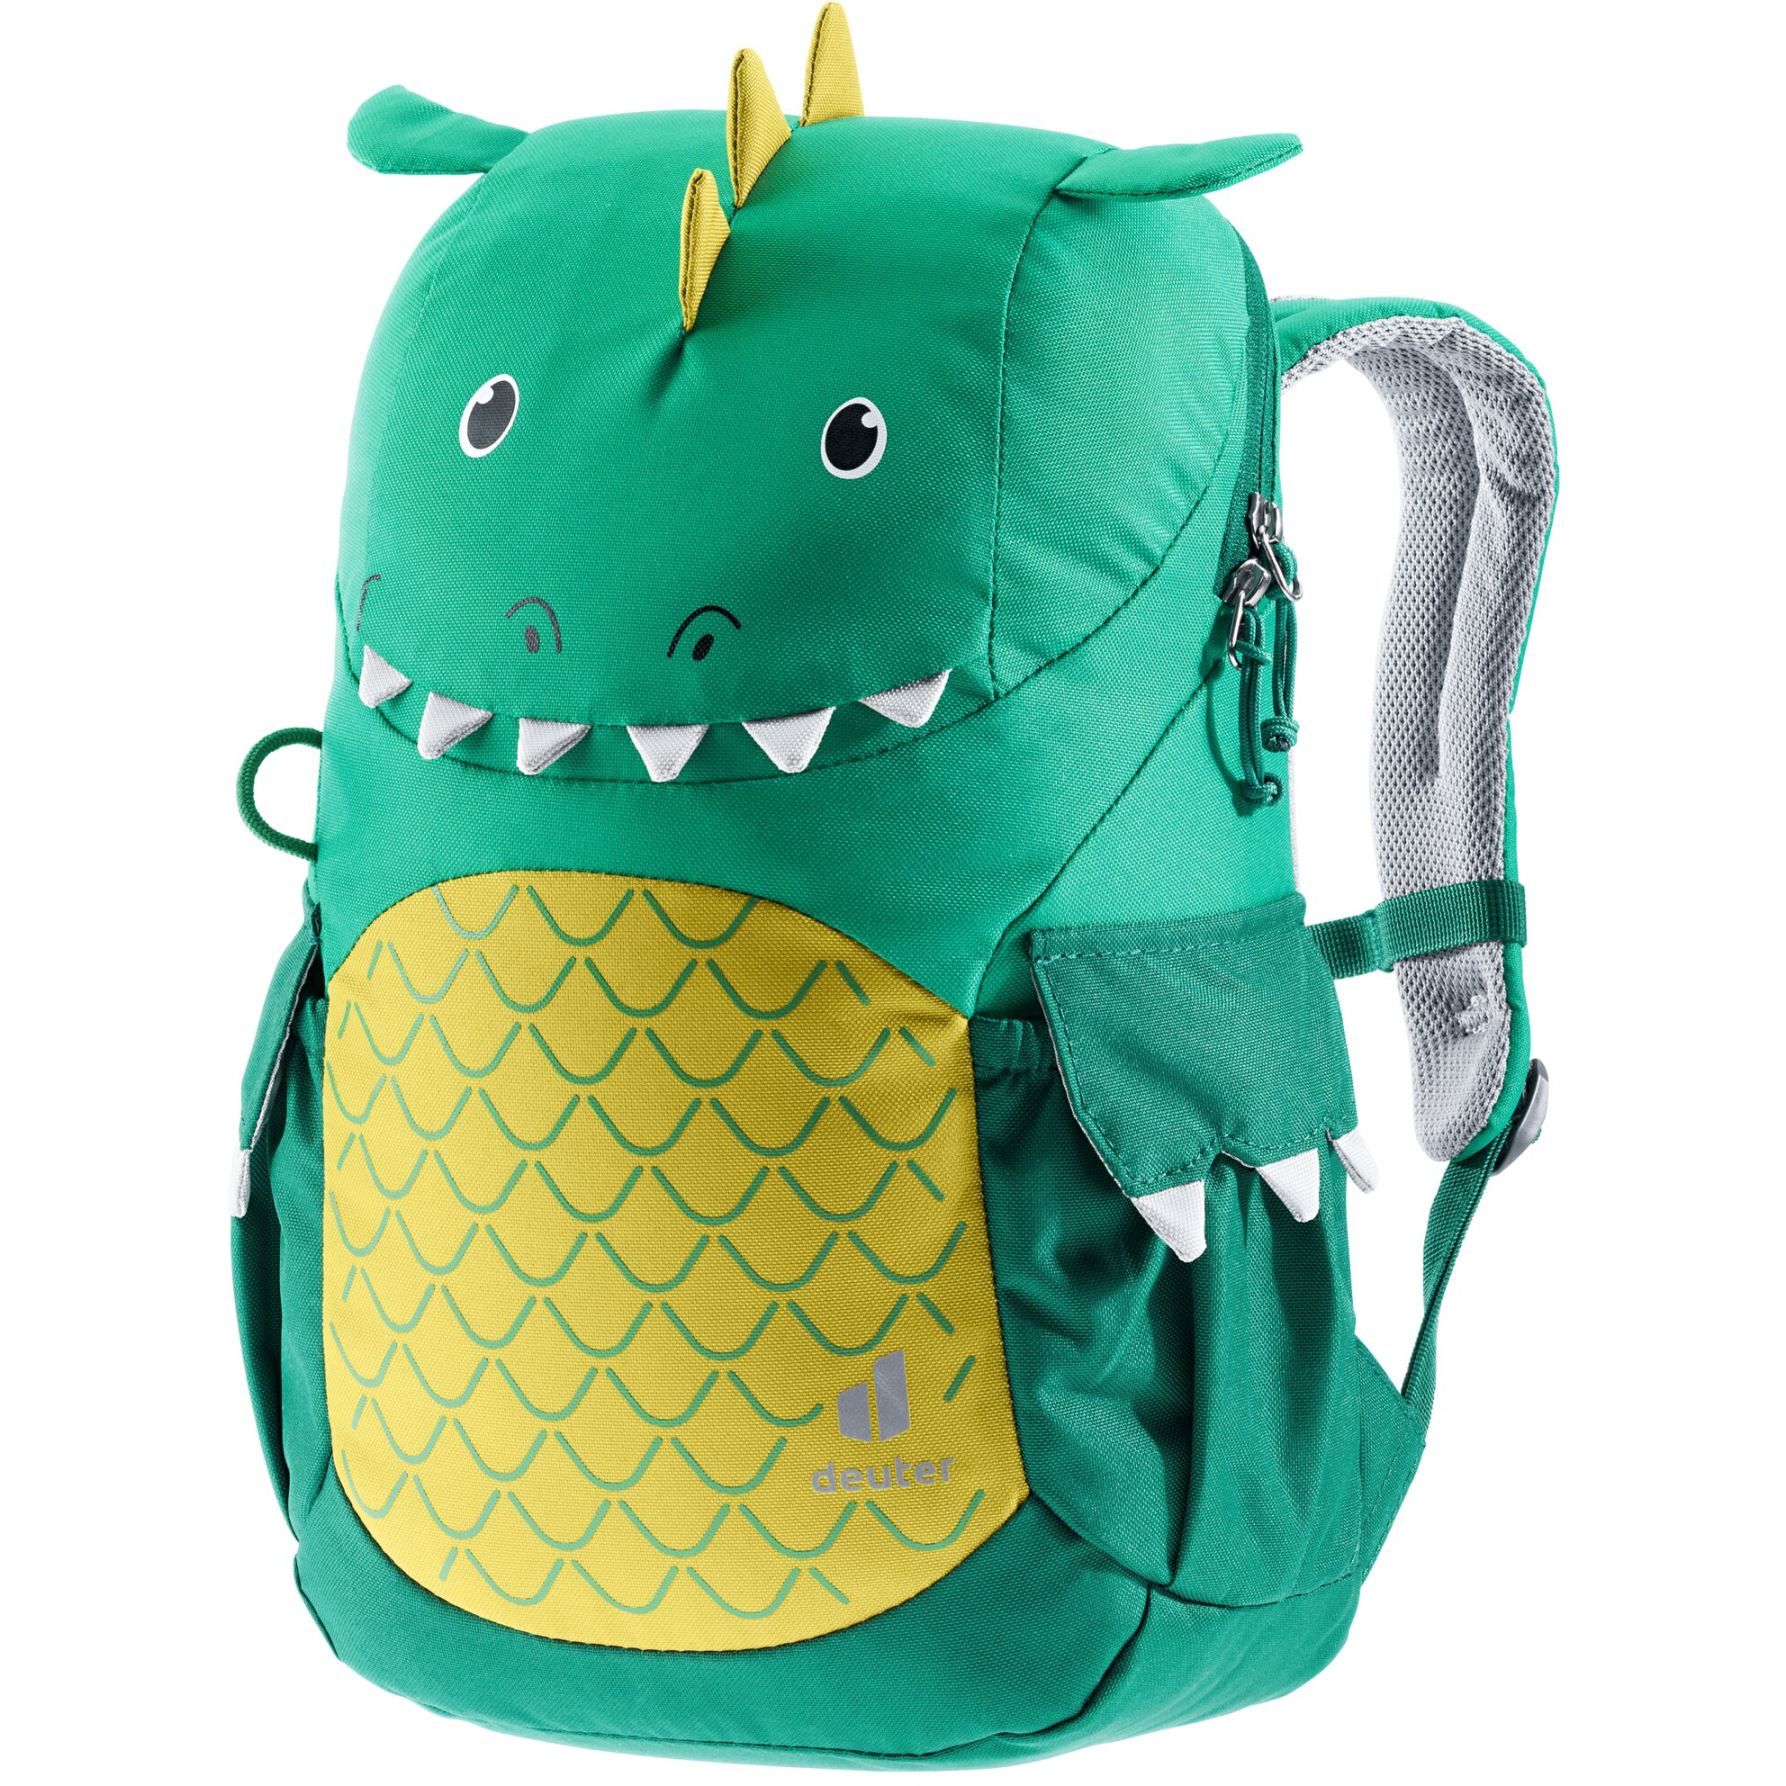 Image of Deuter Kikki Children's Backpack 8L - fern-alpinegreen